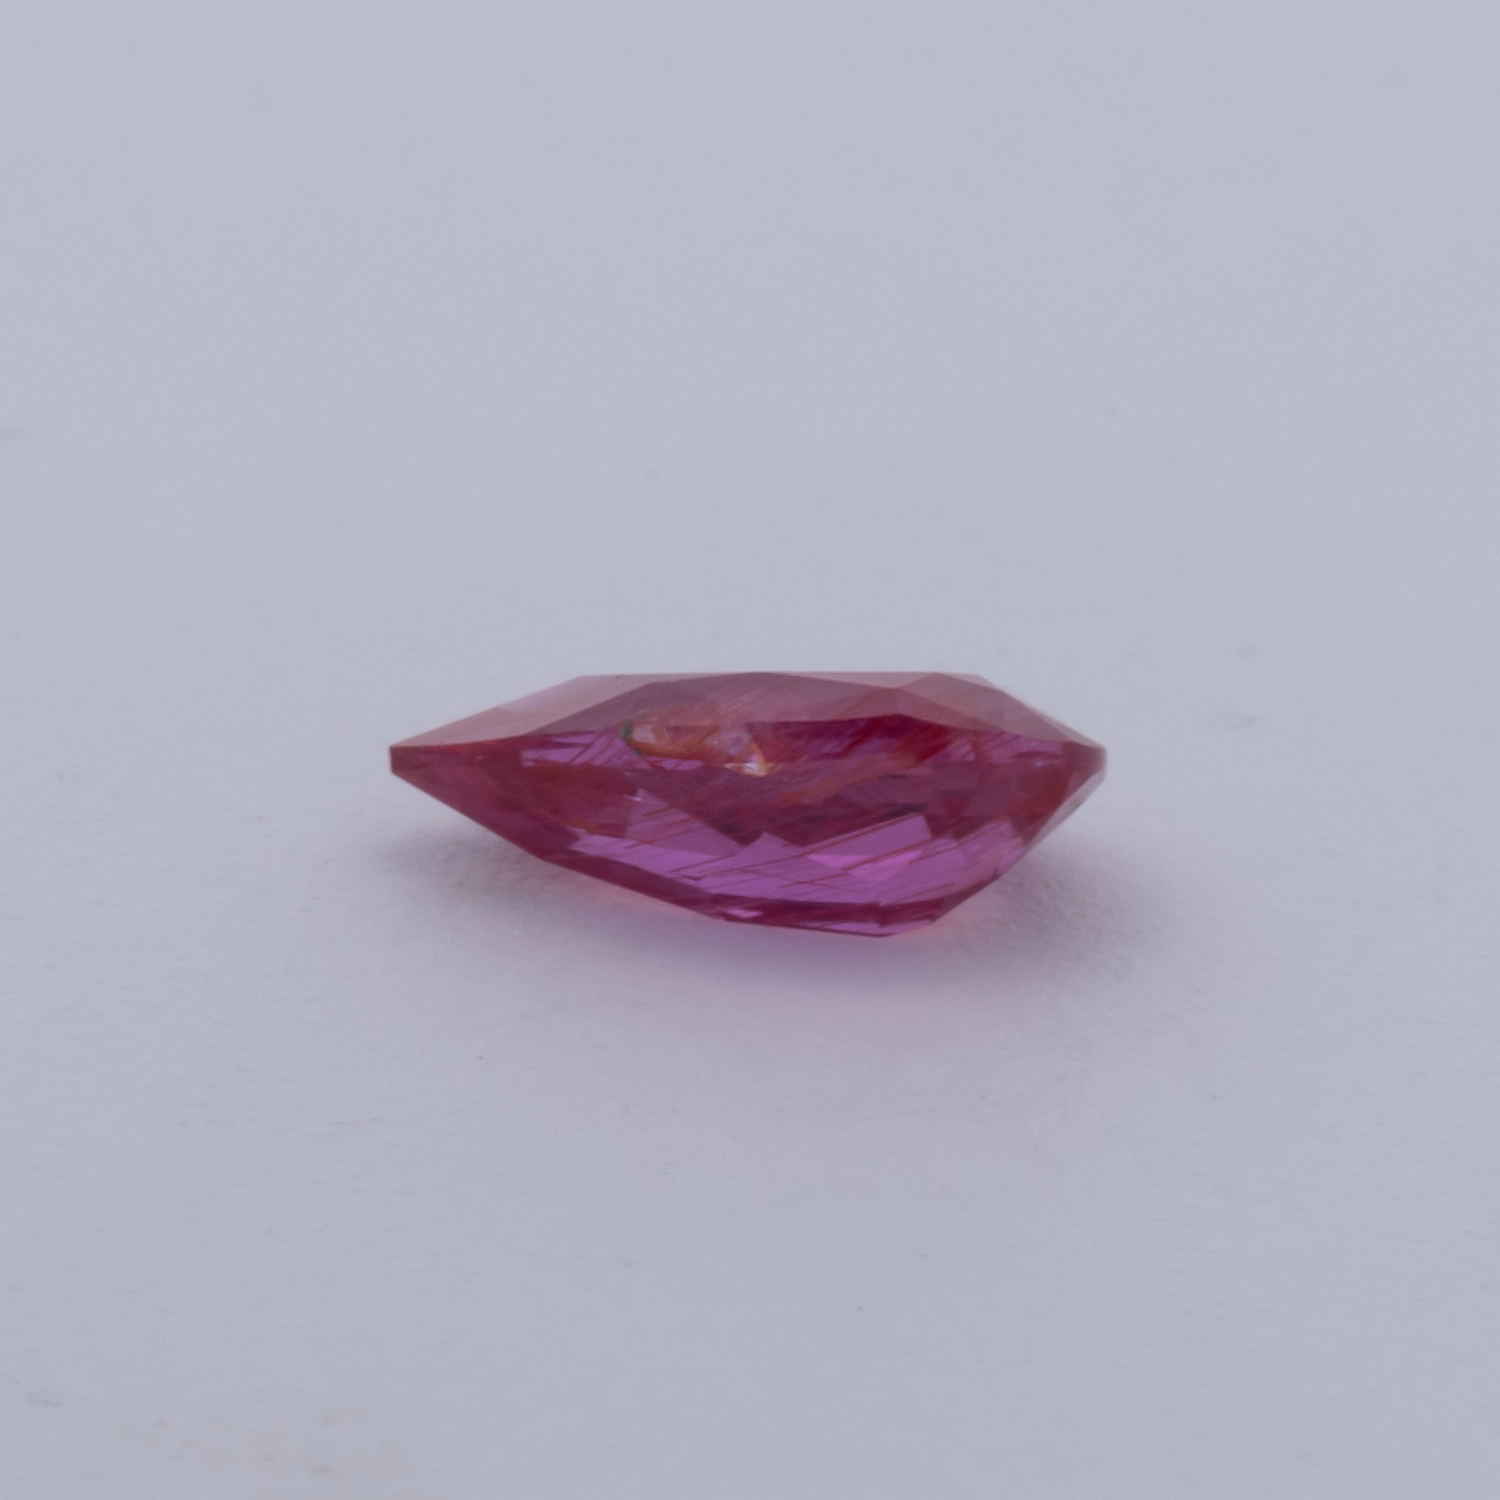 Rubin - rot, birnform, 5.5x3.1 mm, 0.27 cts, Nr. RY10031